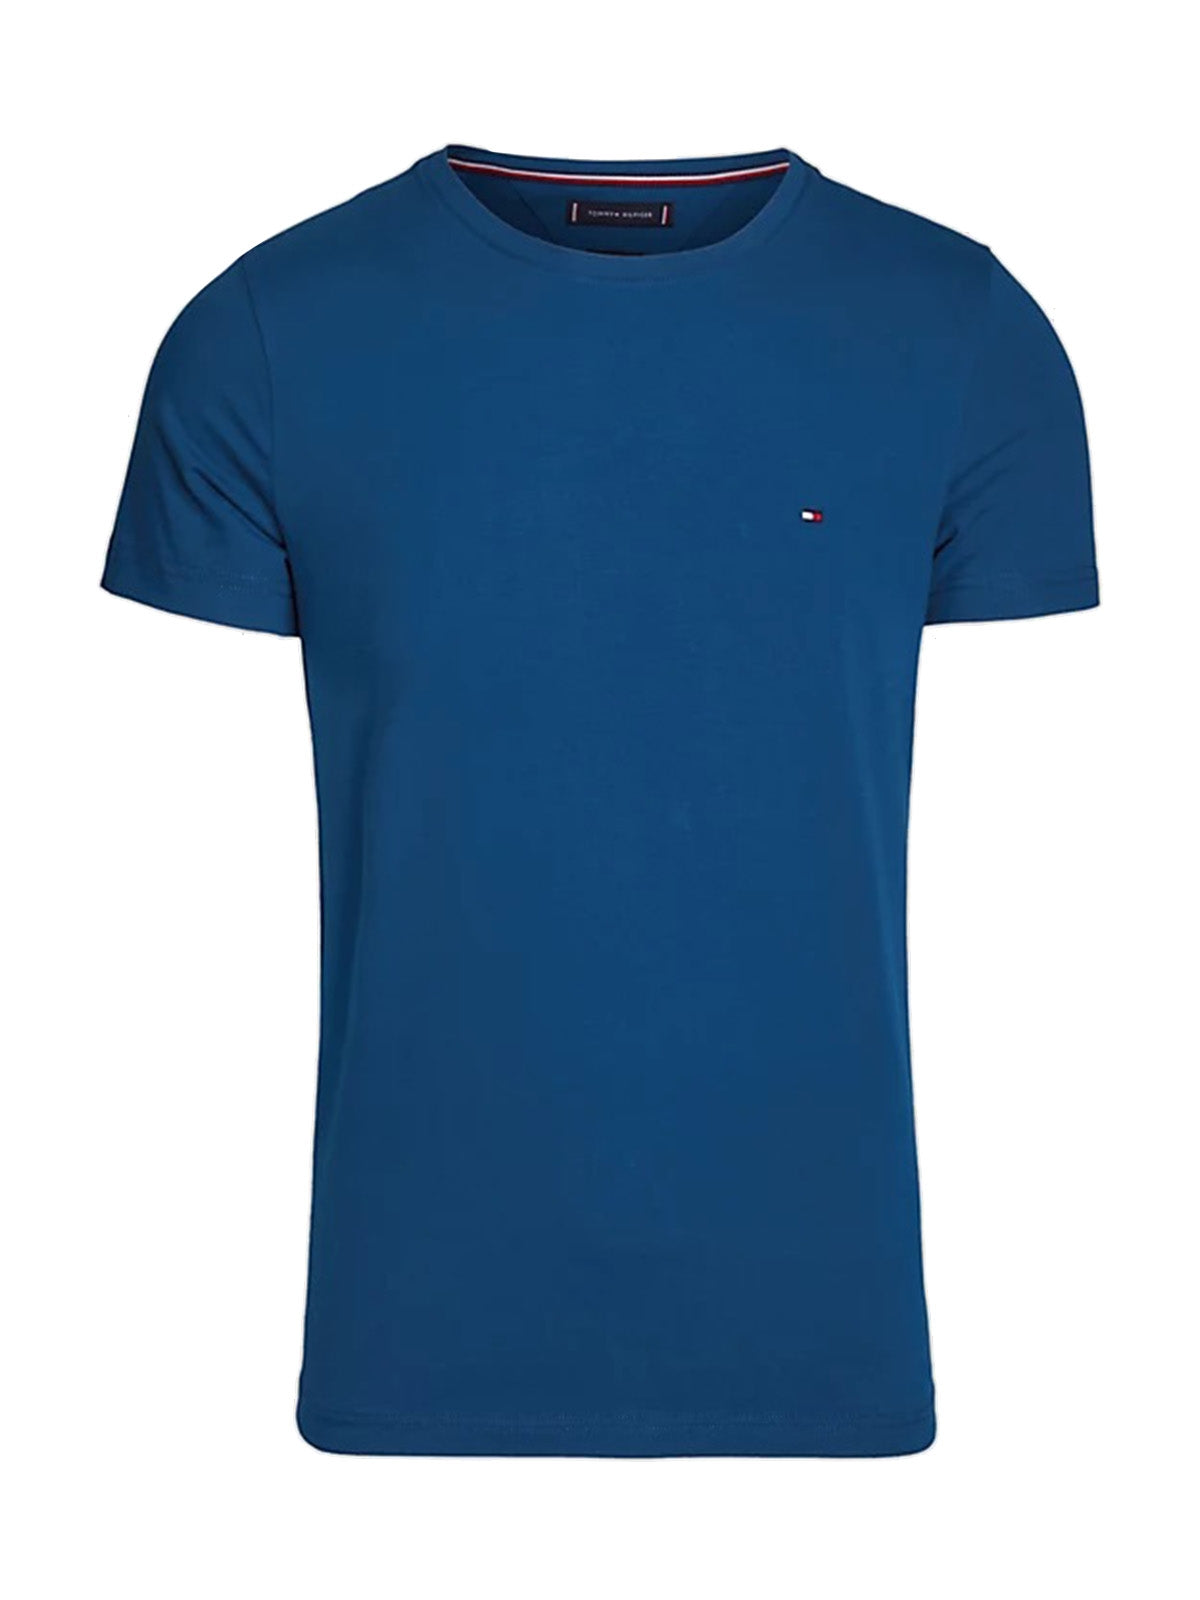 T-shirt Uomo Tommy Hilfiger - T-Shirt Extra Slim Fit - Blu